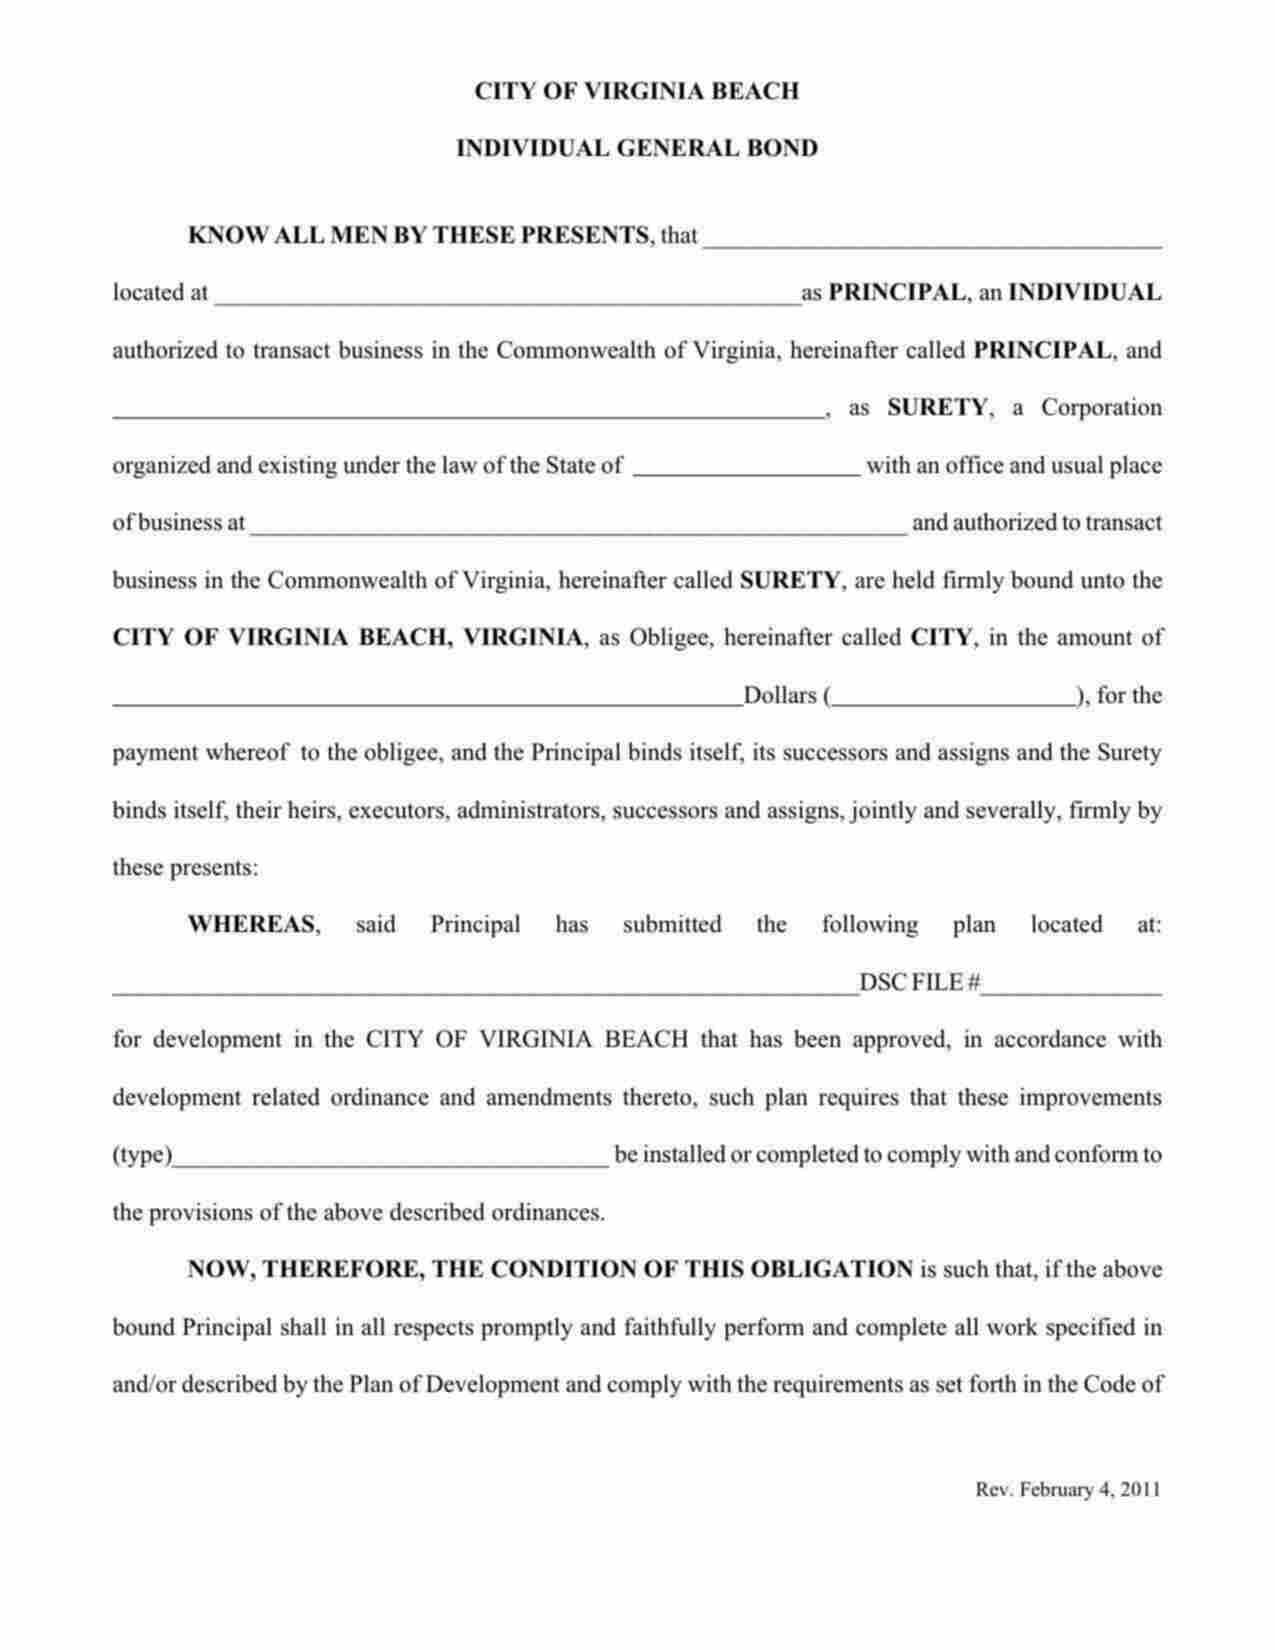 Virginia General Permit (Individual General) Bond Form